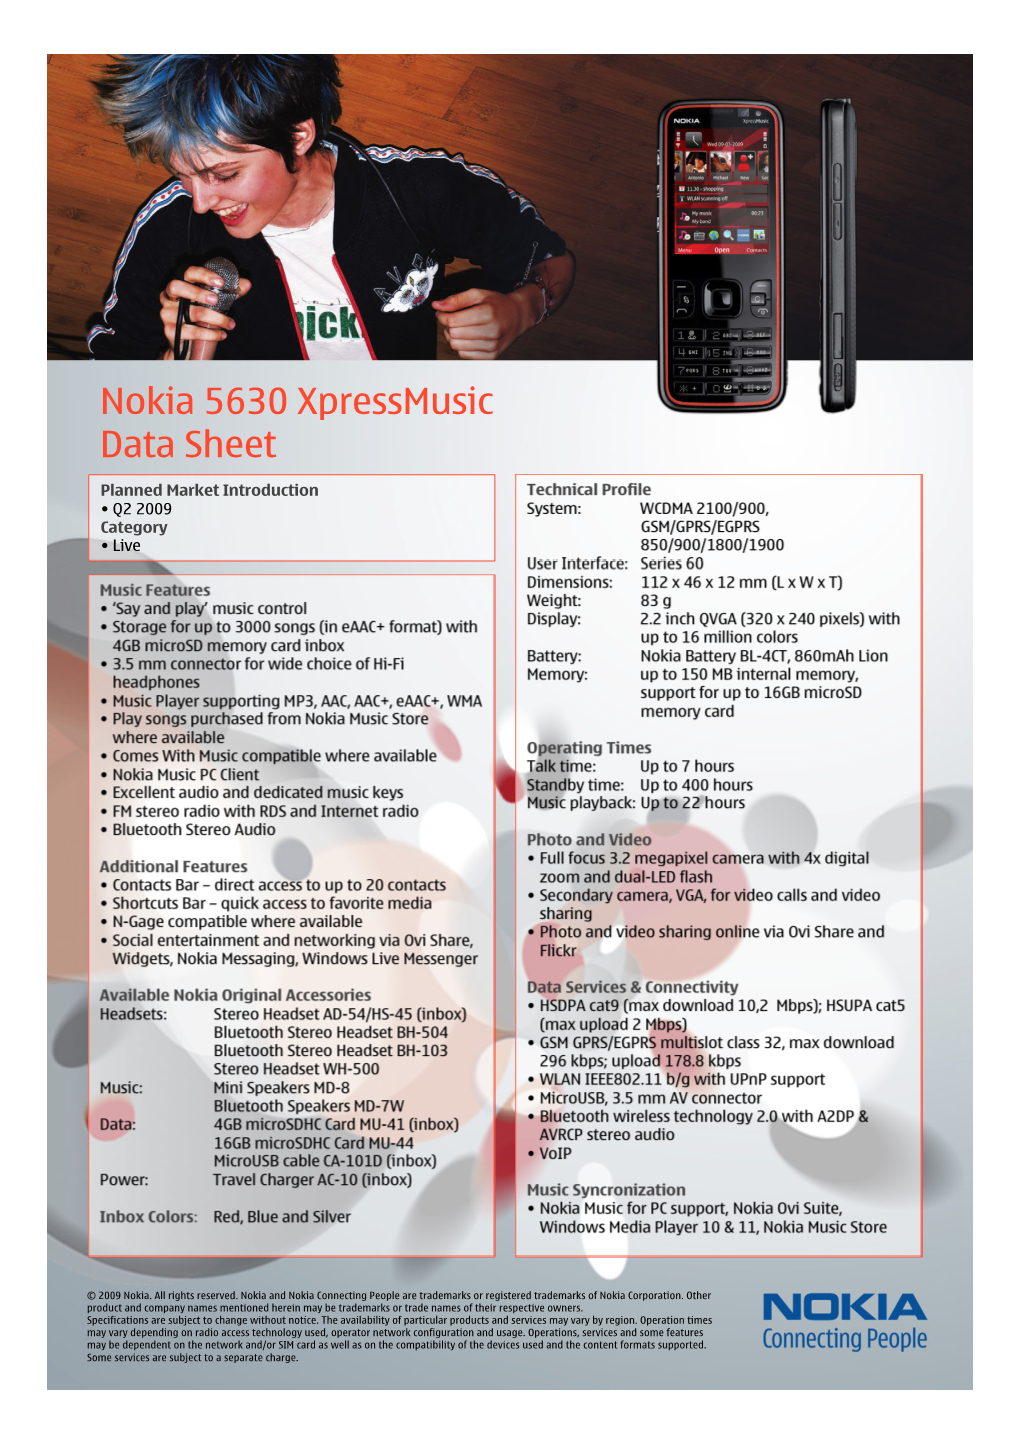 Nokia 5630 Xpressmusic Data Sheet